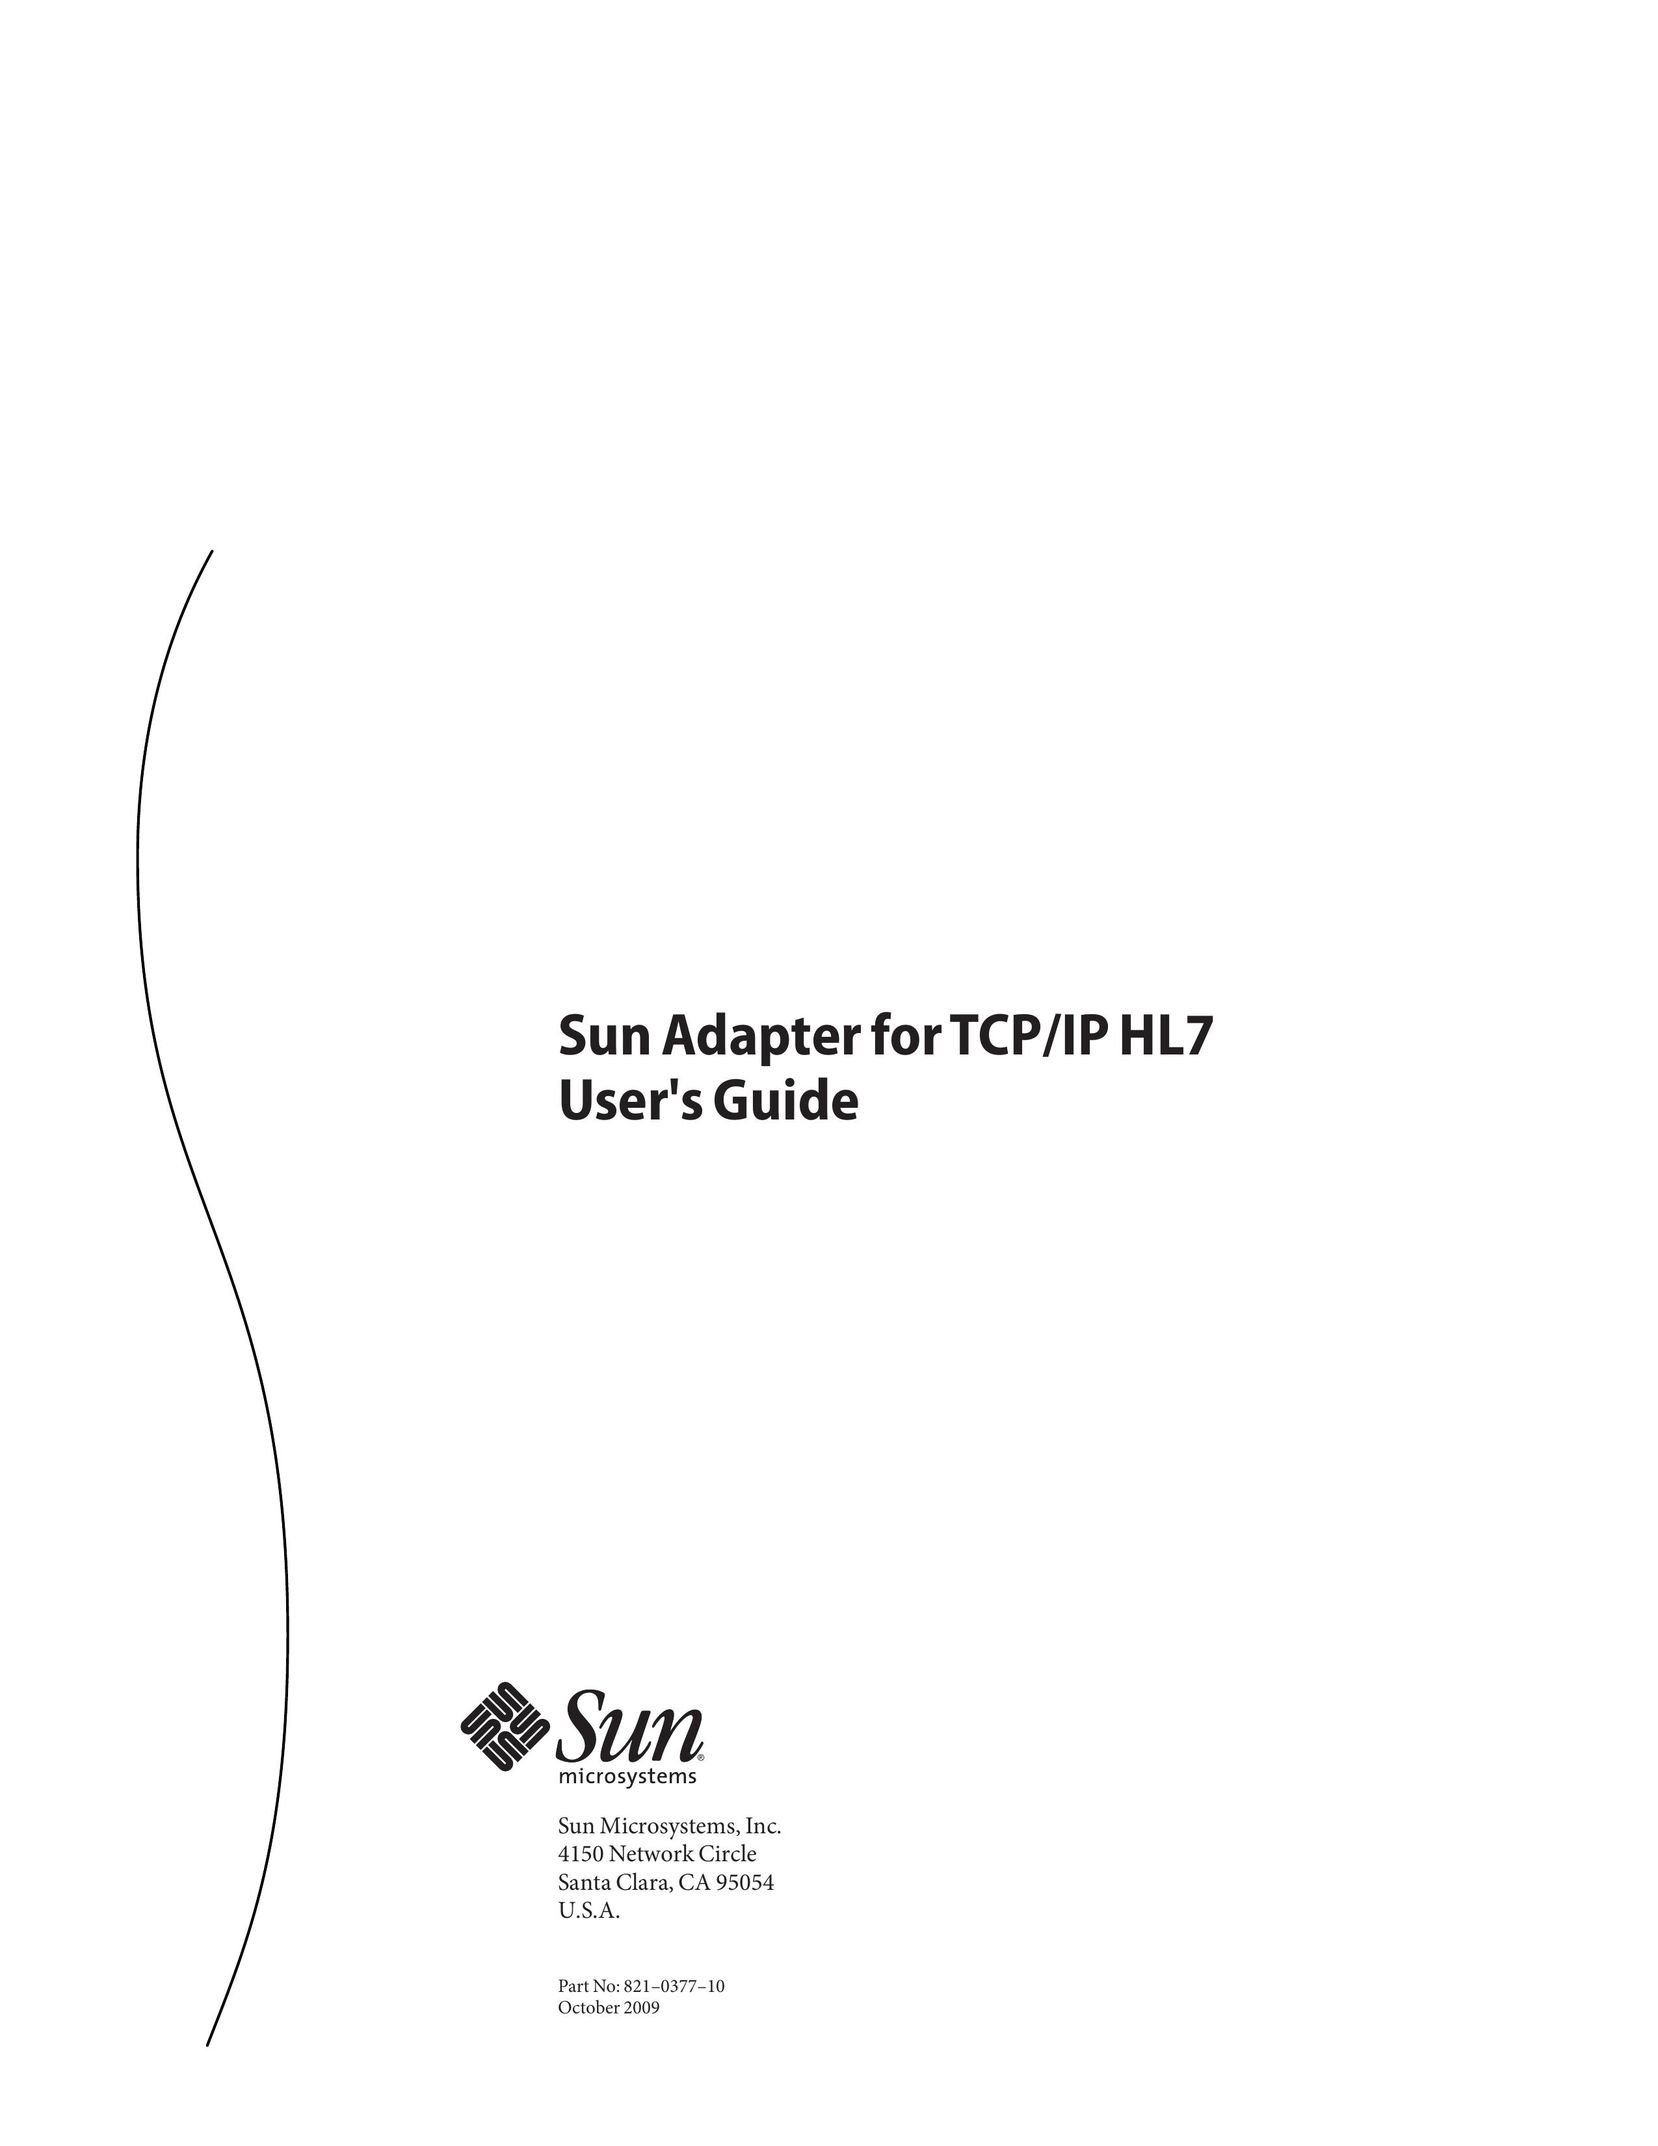 Sun Microsystems TCP Computer Hardware User Manual